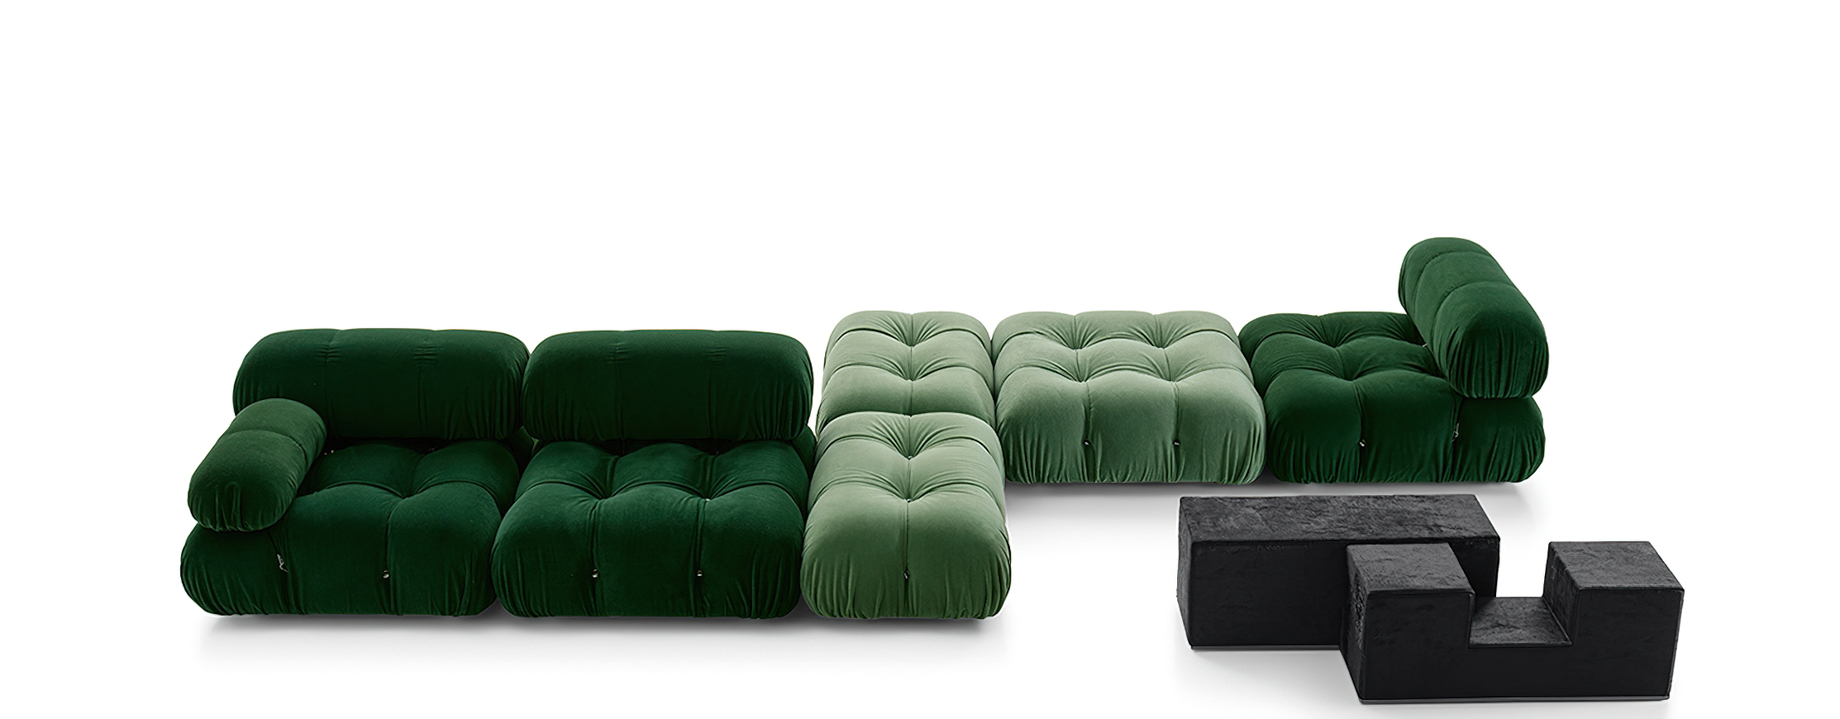 Camaleonda Classic Sofa Collection B&B Italia - Mario Bellini - Green